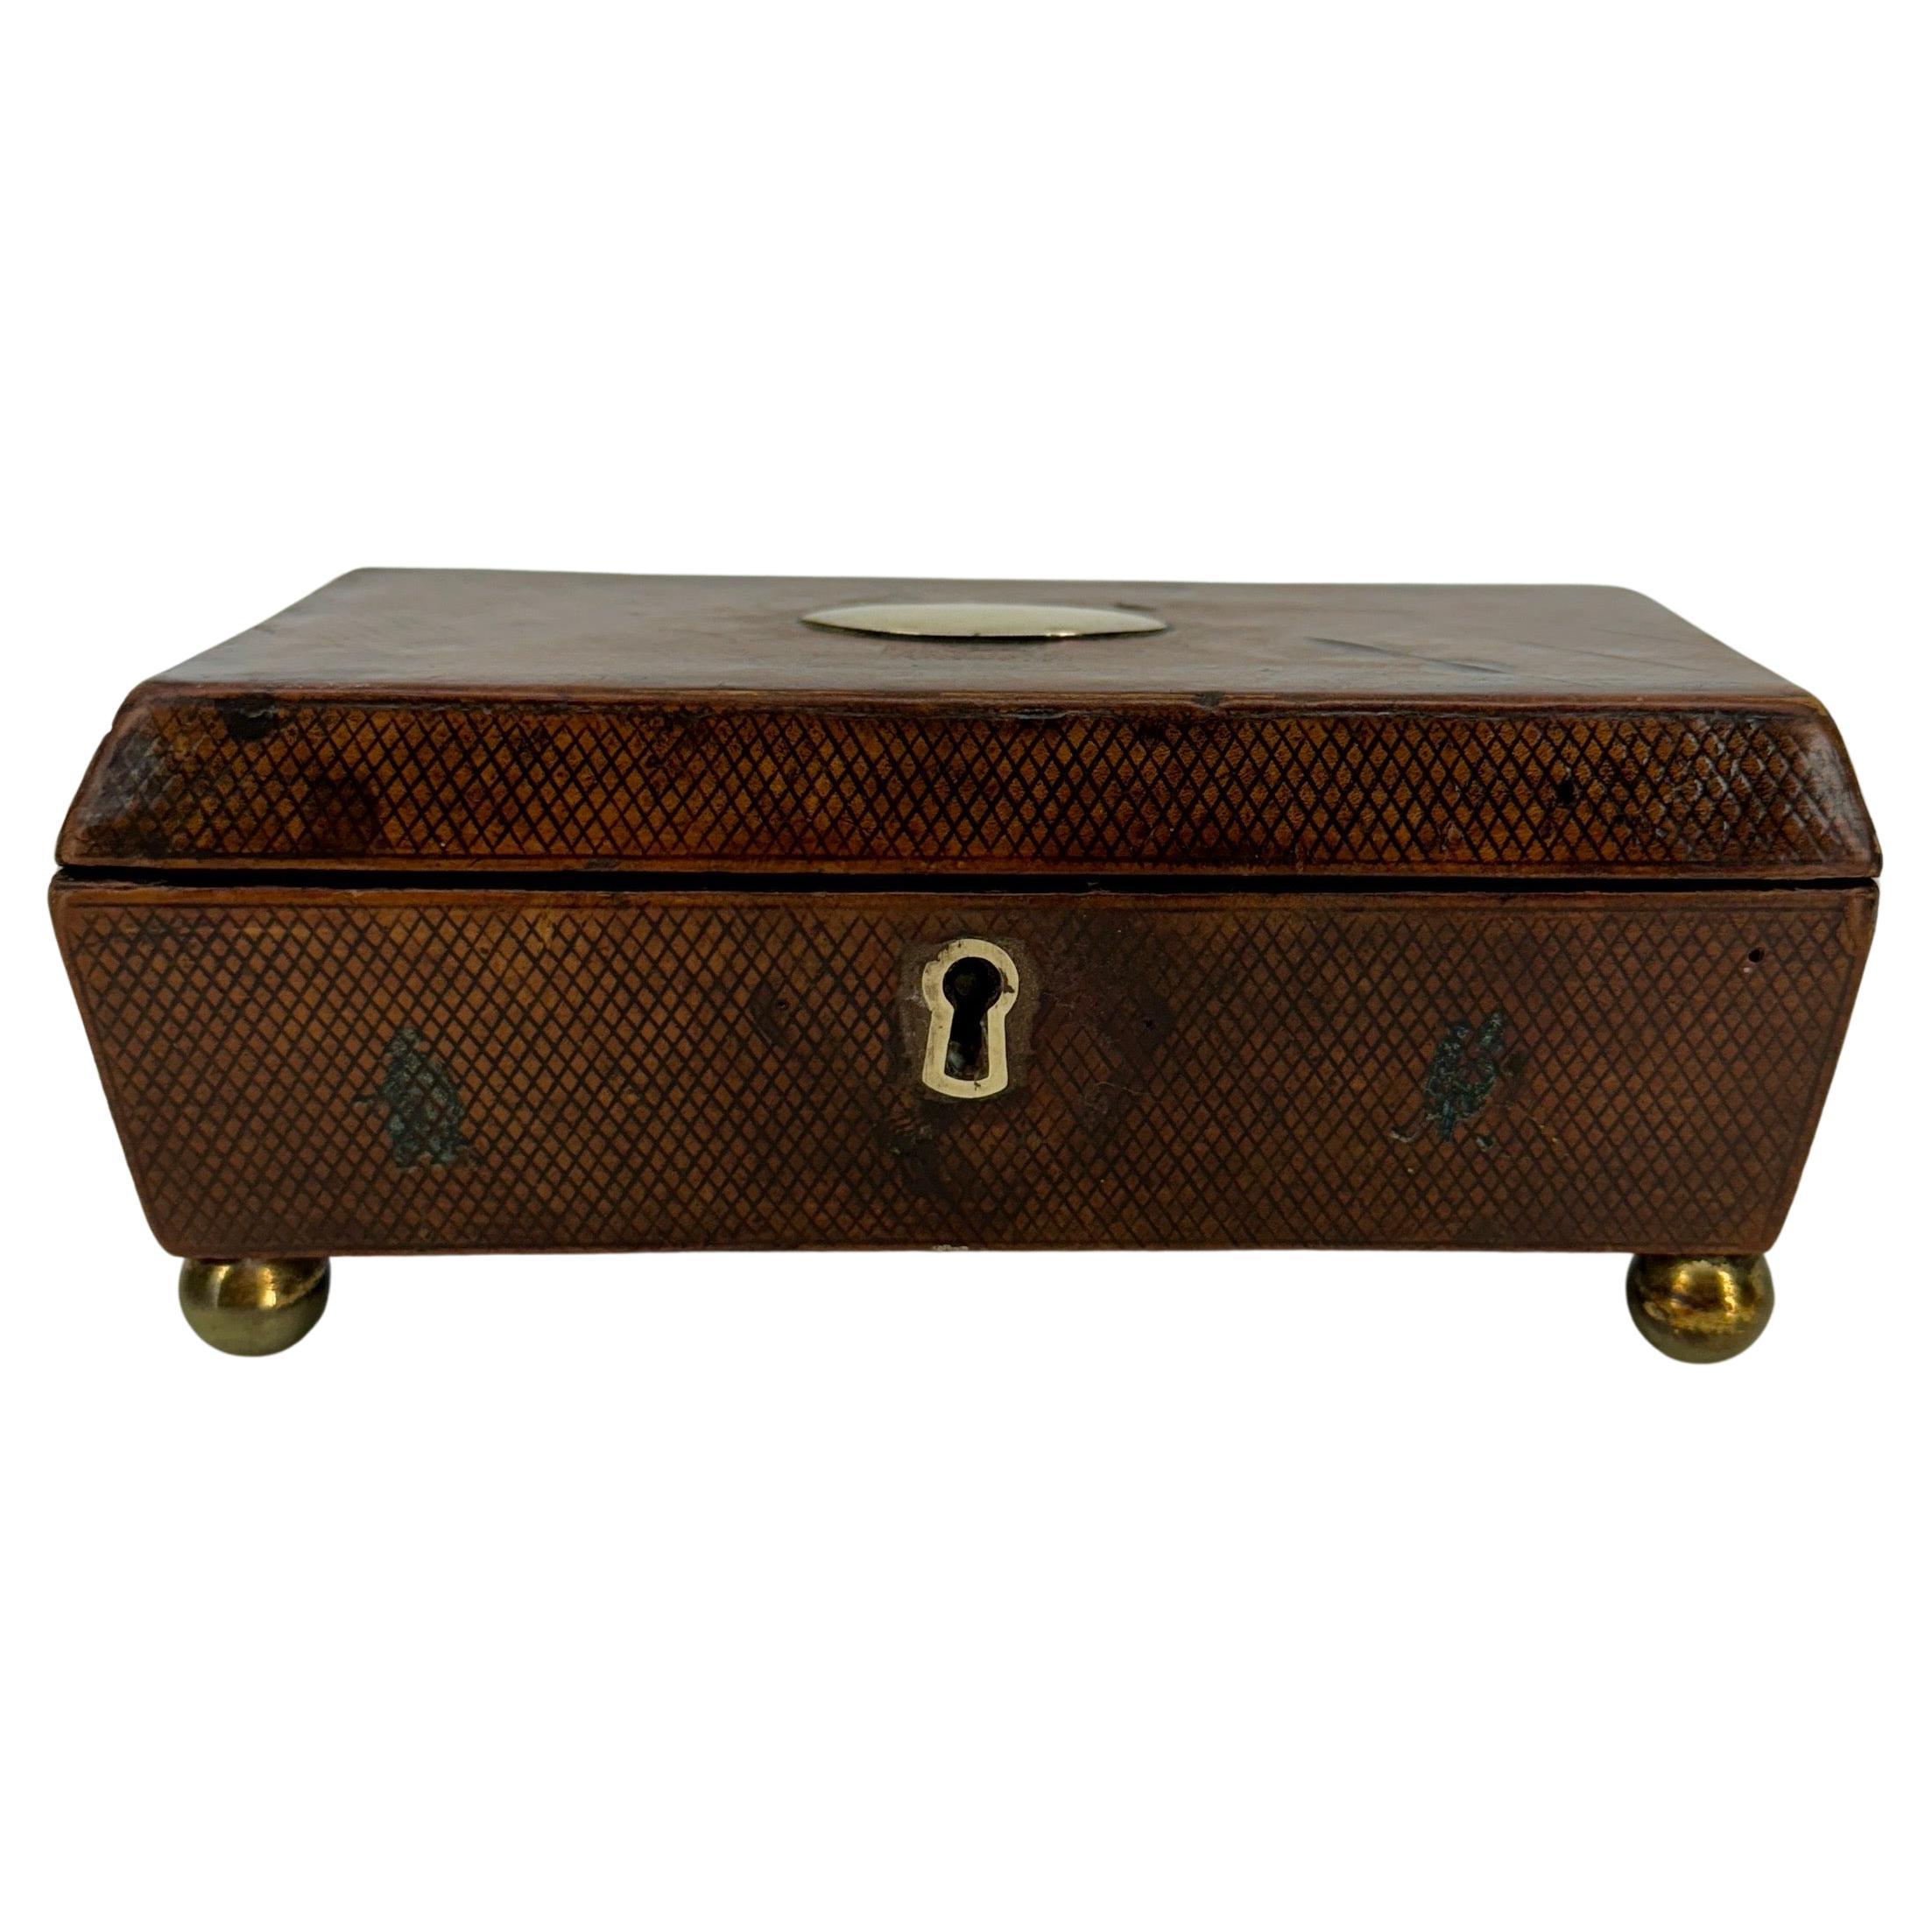 Small Rectangular Leather Jewelry Box on small brass balls with diamond pattern.  

